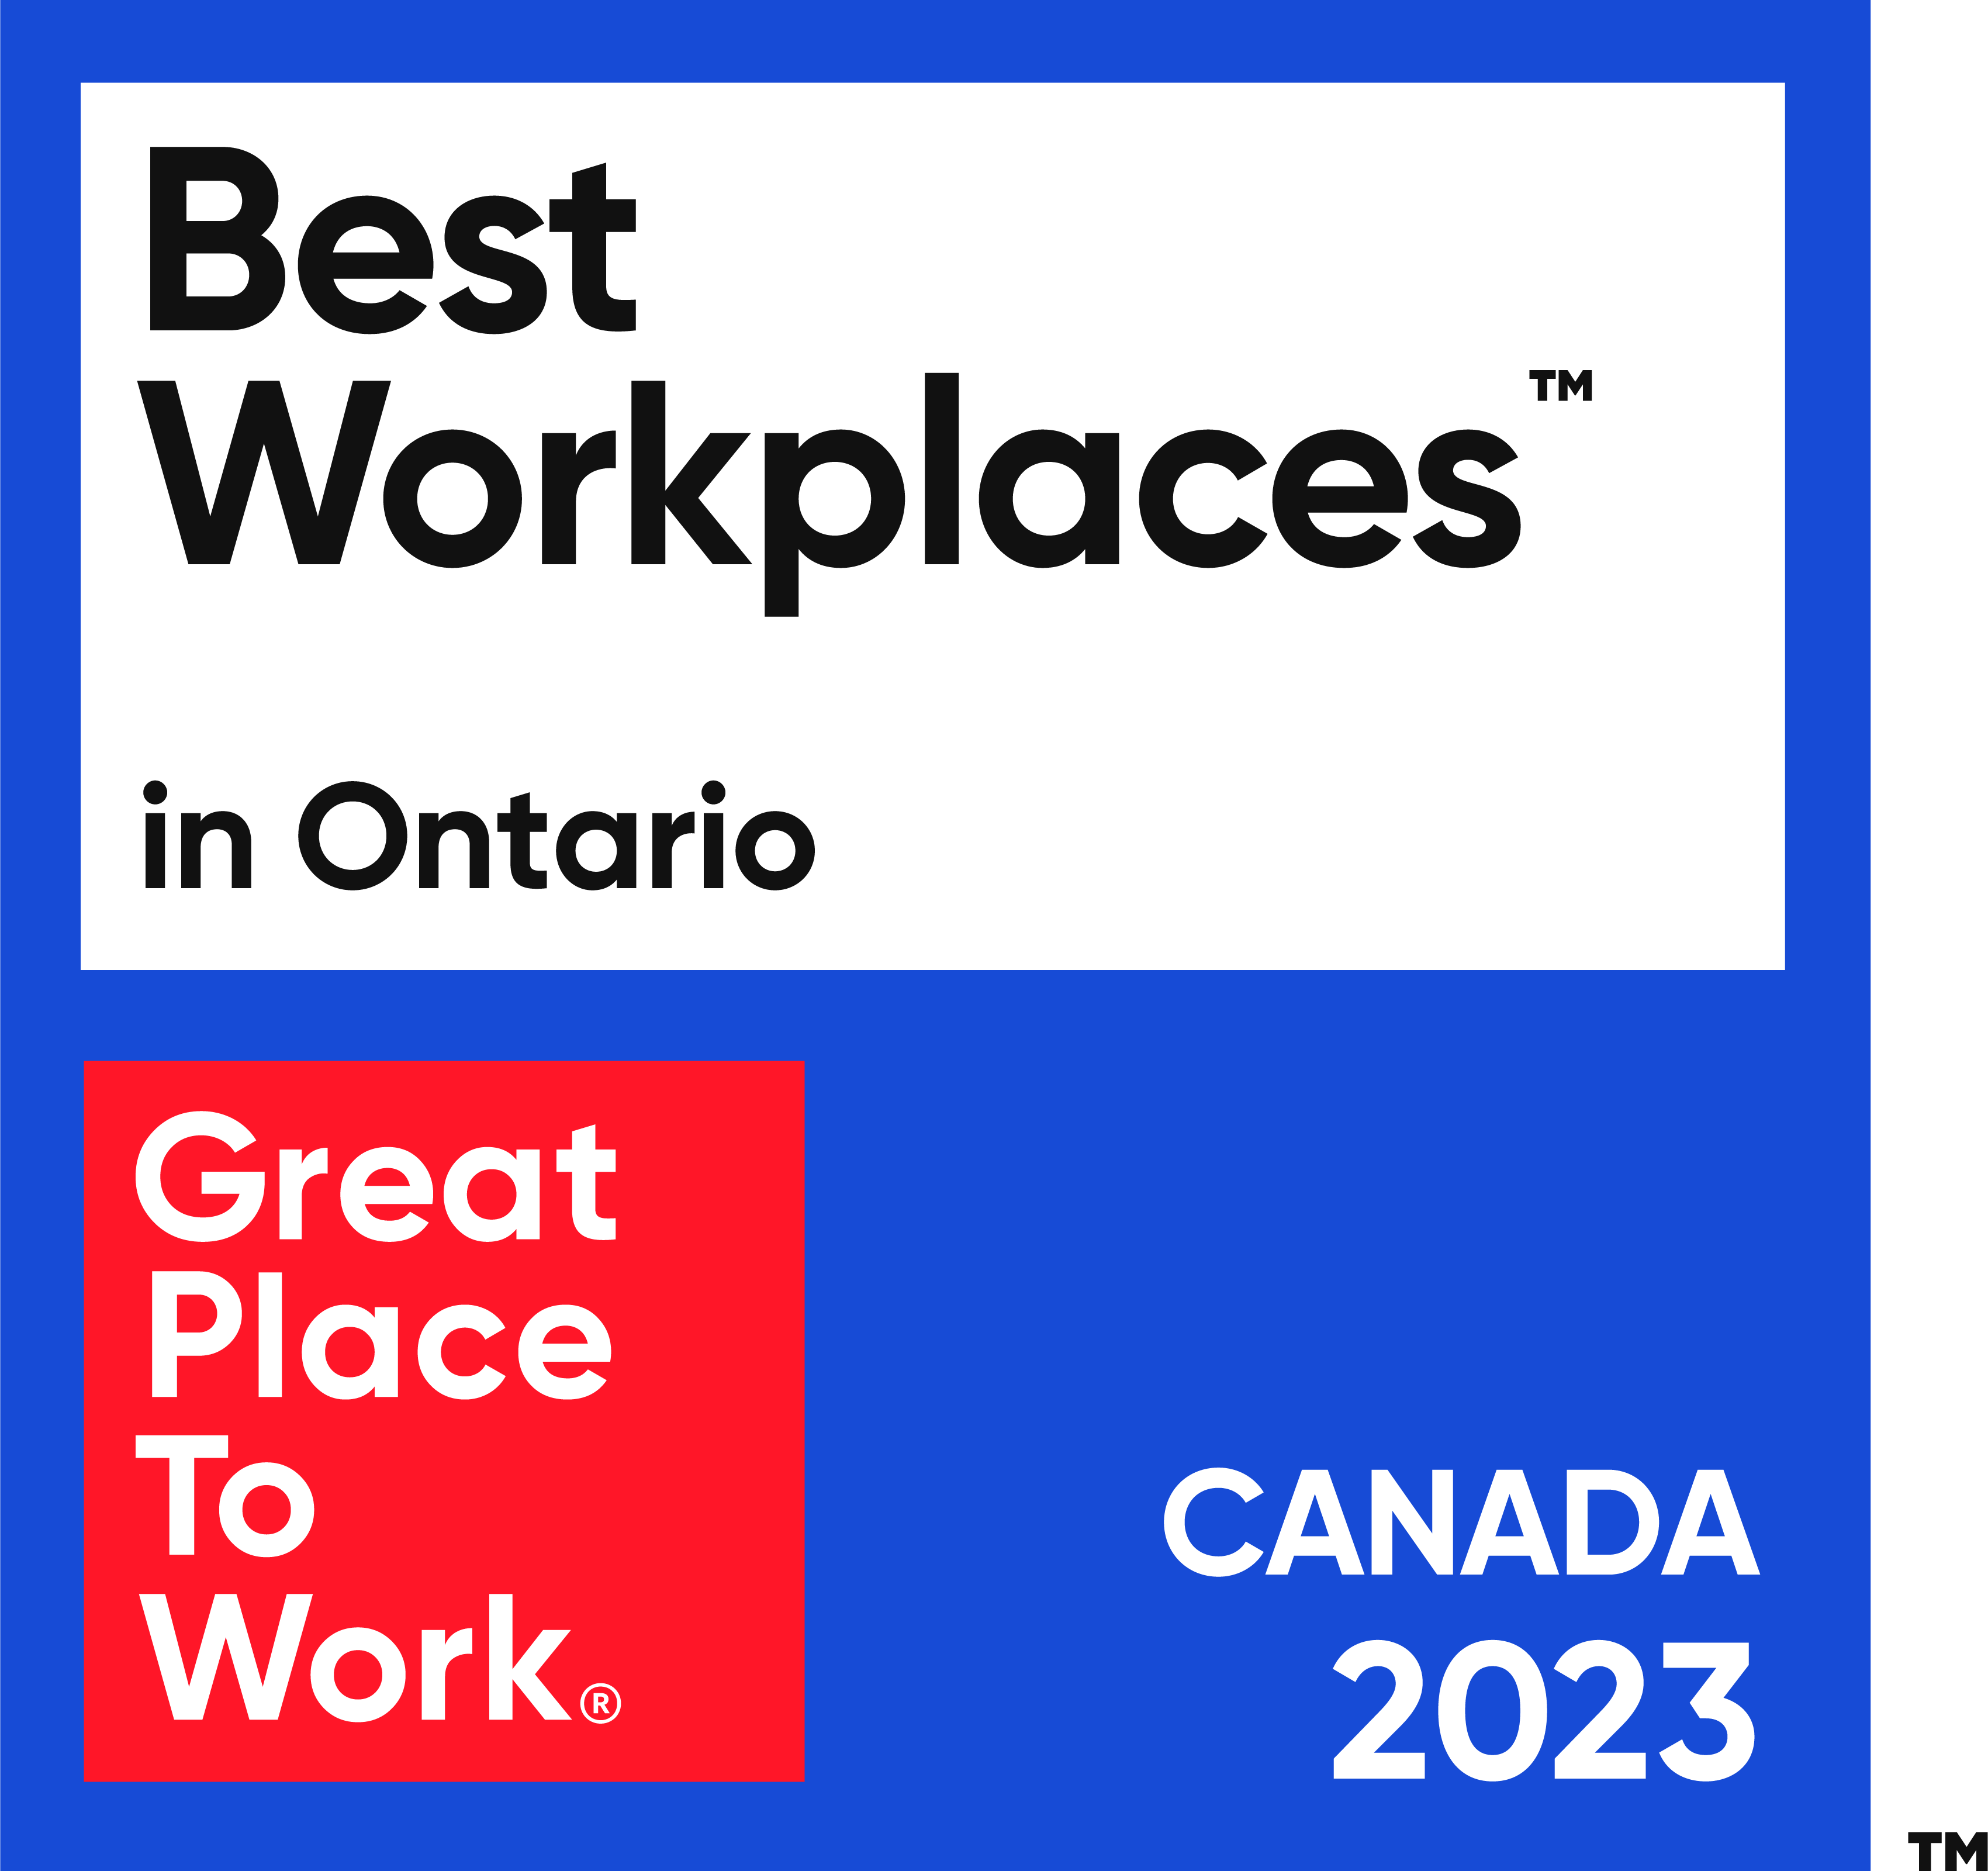 Best workplaces in Ontario